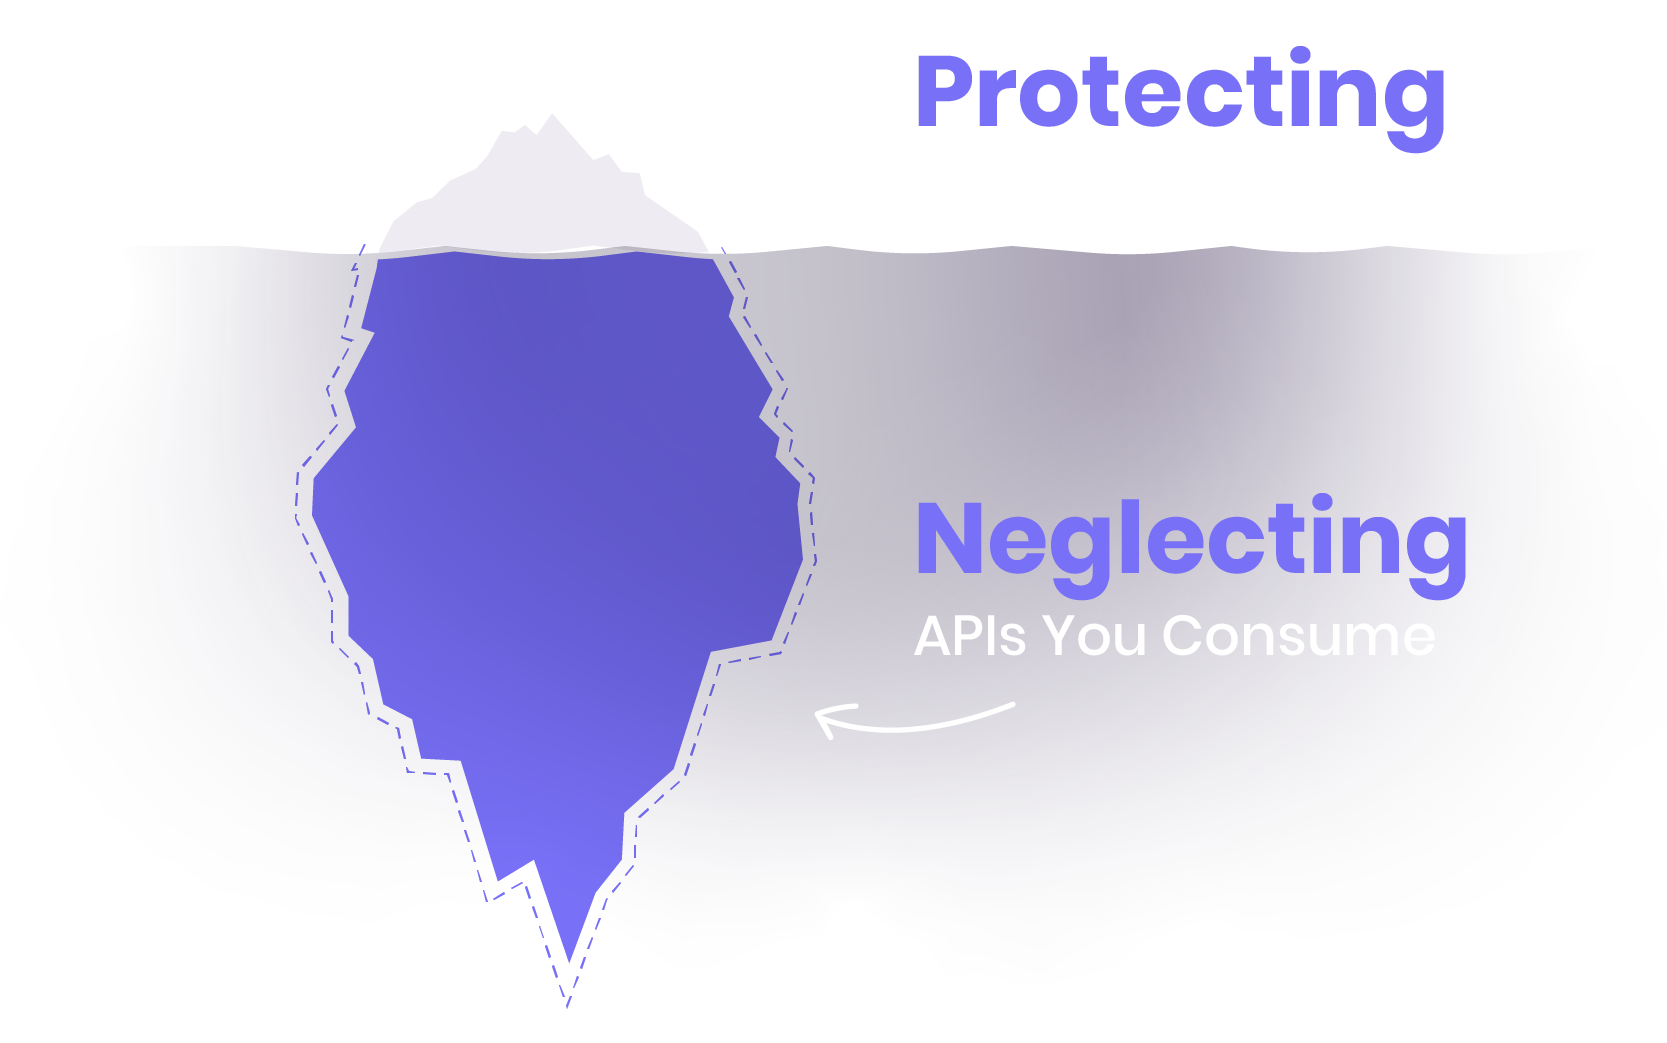 API Security market represented by a glacier